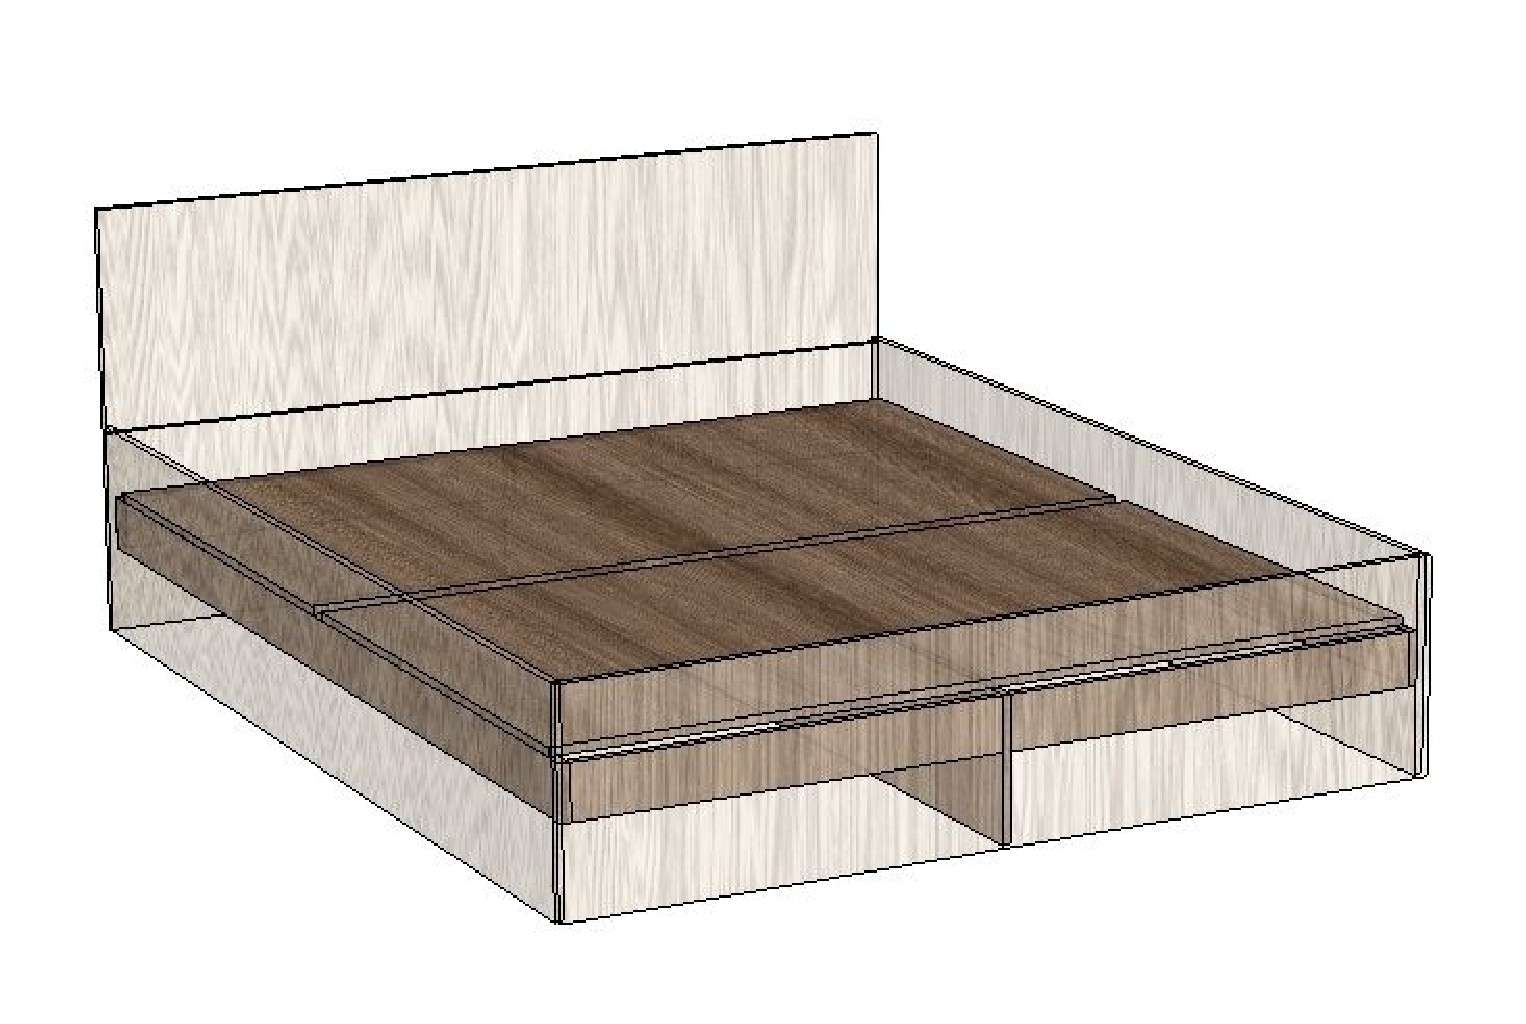 Основание кровати лдсп. Кровать (1,4х2,0) кр-2802. Кровать (1,4х2,0) кр-2852. Кровать (1,4х2,0) кр-2862. Кровать (1,4х2,0) кр-1862.